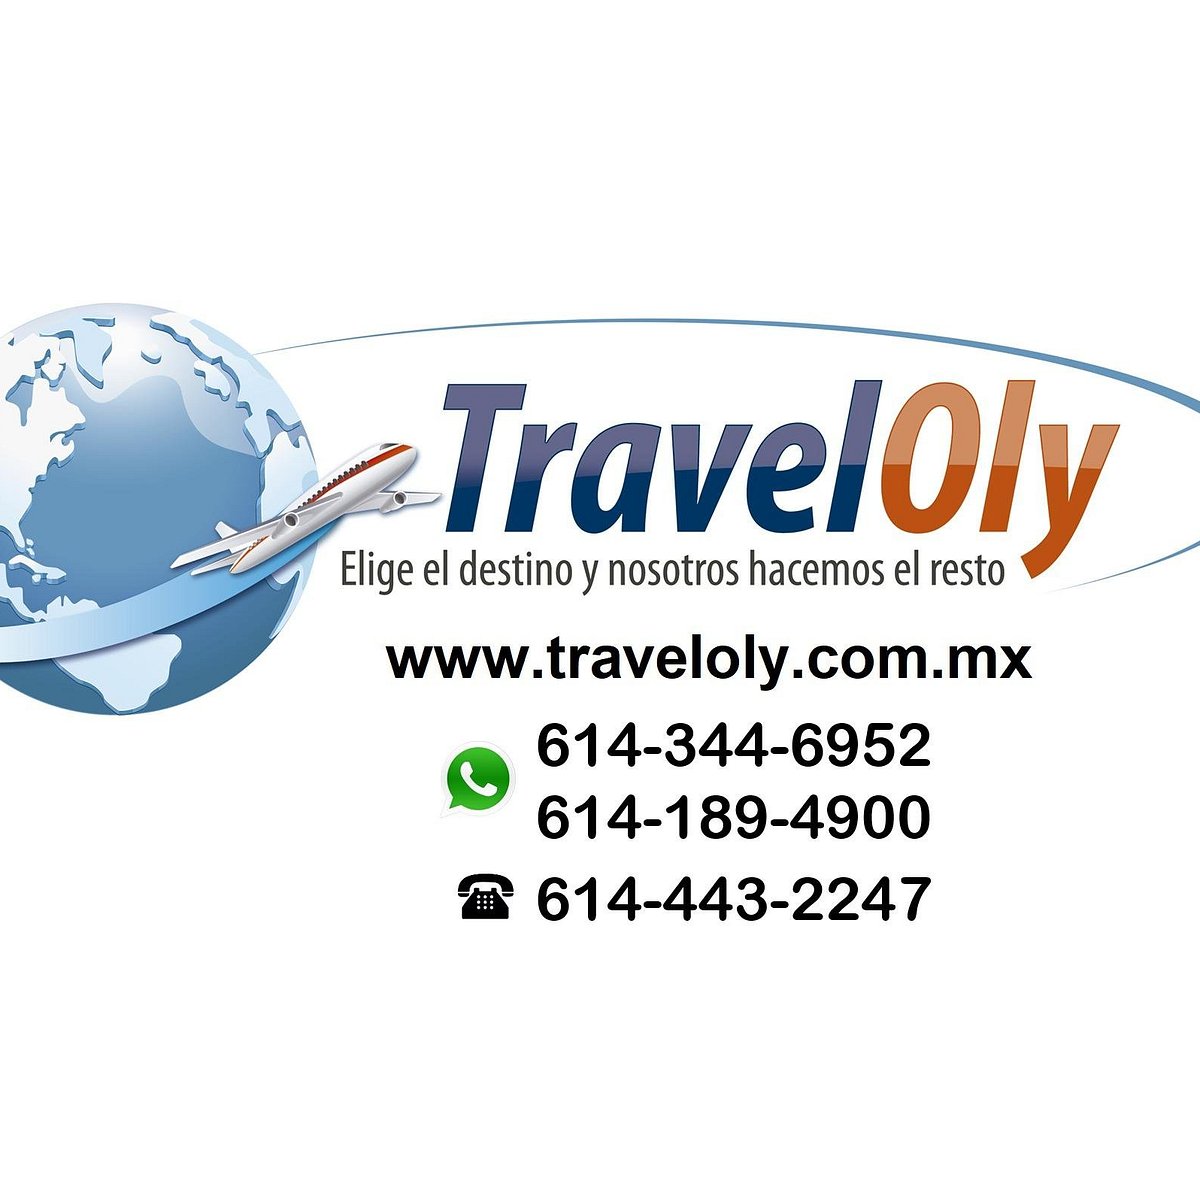 Travel Oly (Chihuahua, Mexico): Hours, Address - Tripadvisor